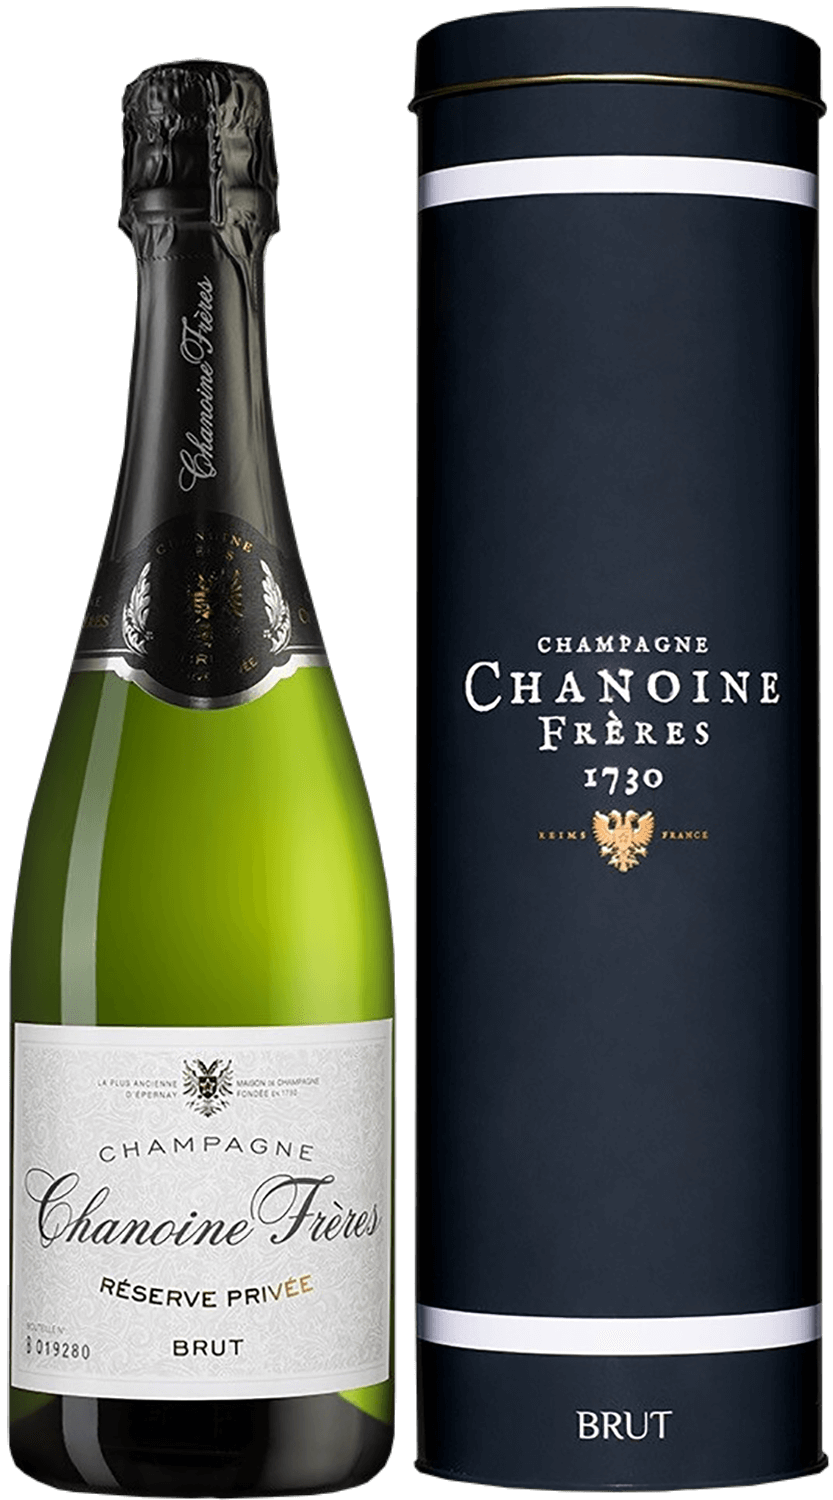 Reserve Privee Brut Champagne AOC Chanoine Freres (gift box) mailly grand cru brut reserve champagne aoc gift box